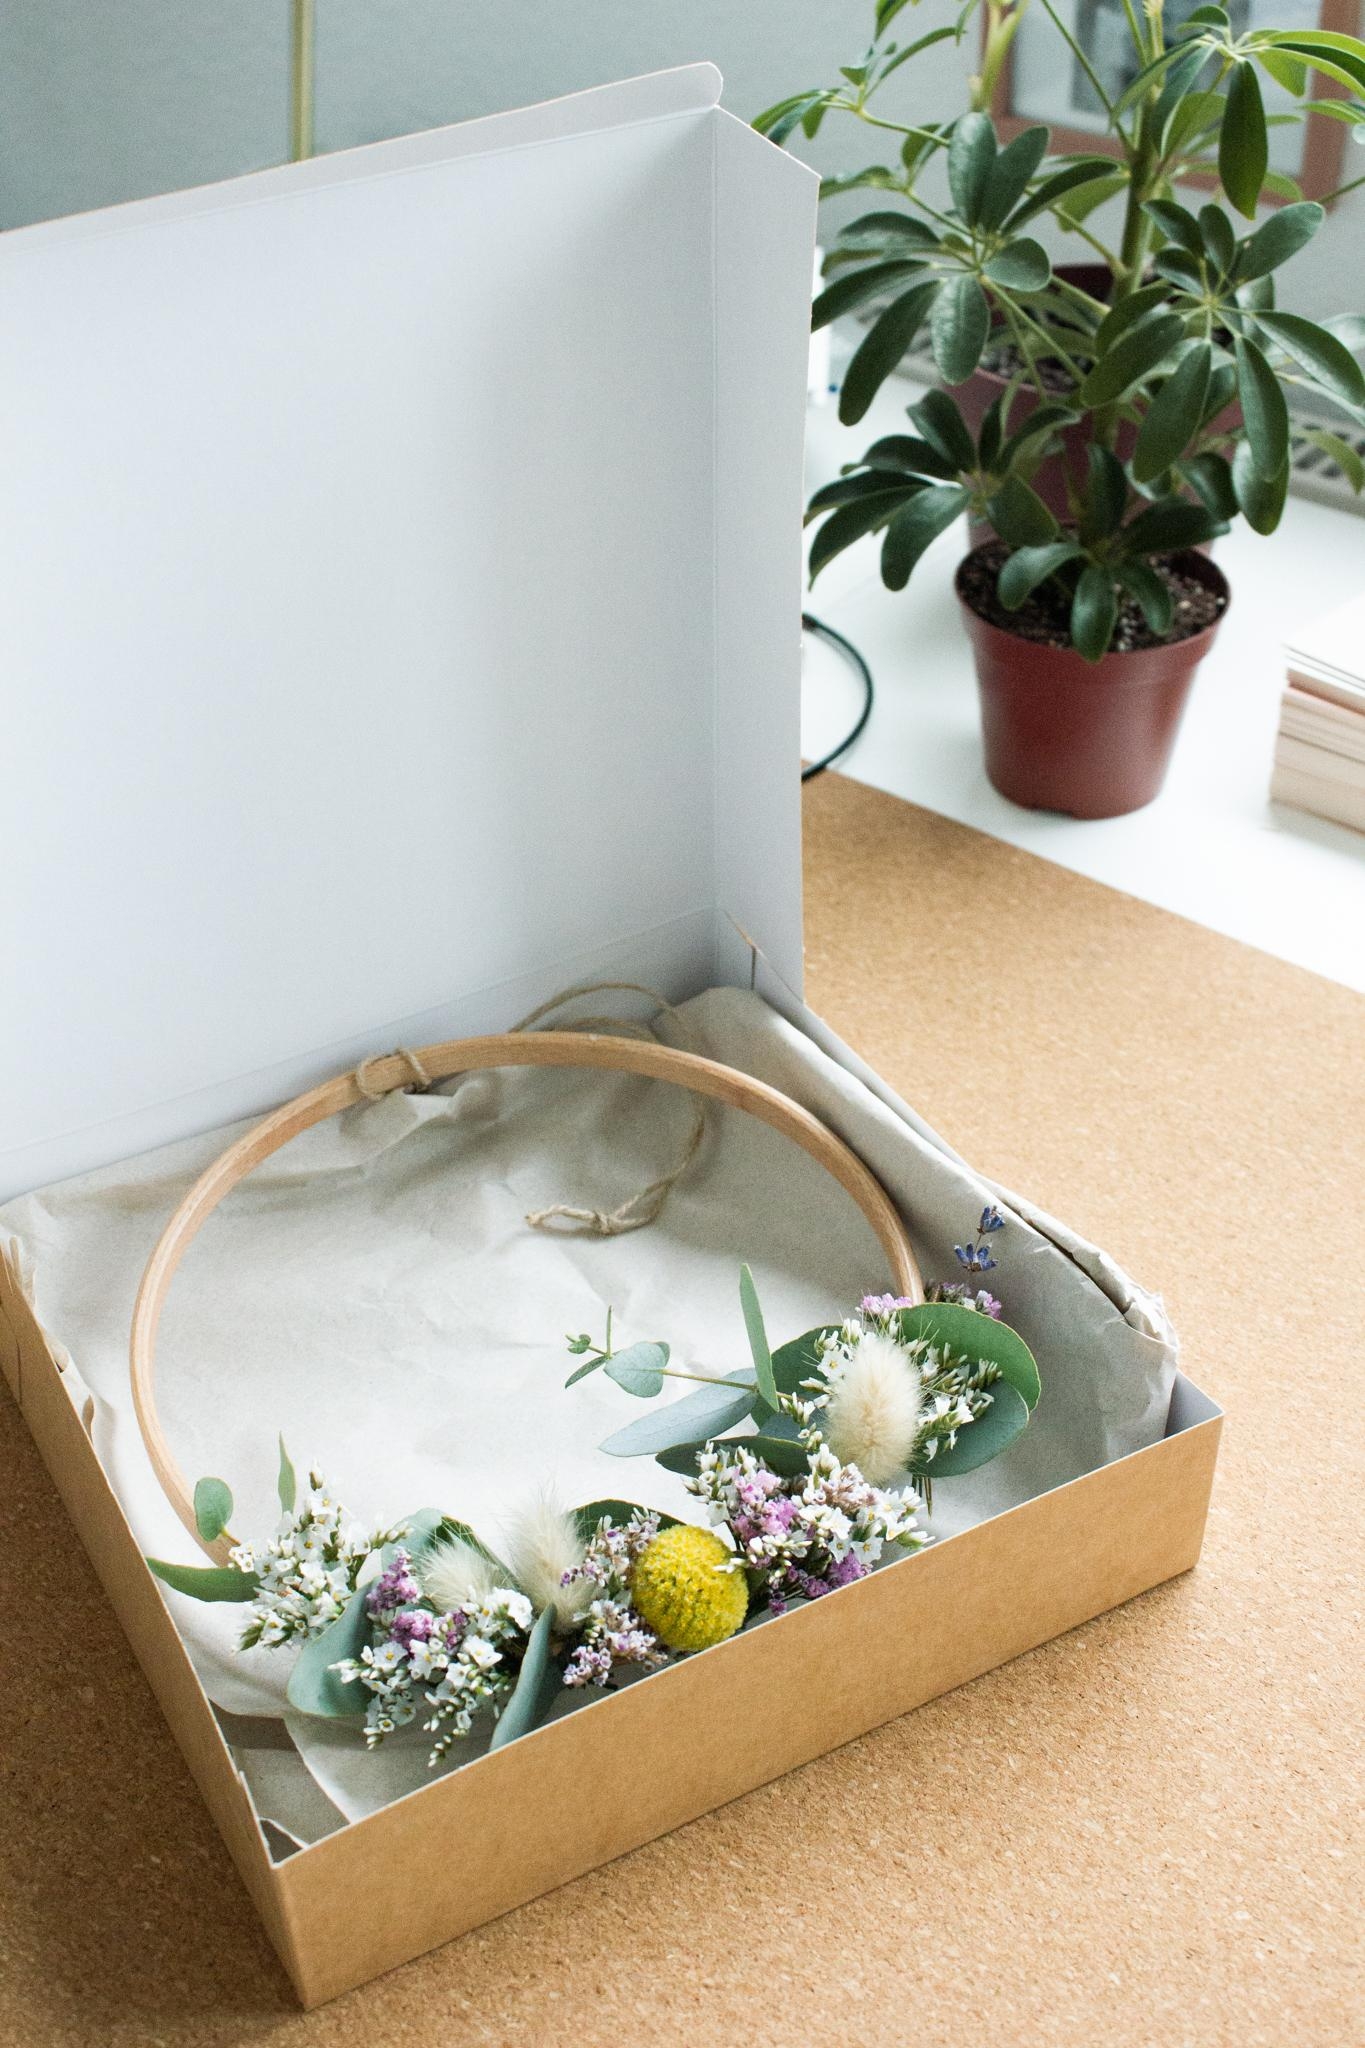 #blumenreifen #interior #home #handmade #flowers #bloominghoops #couchliebt